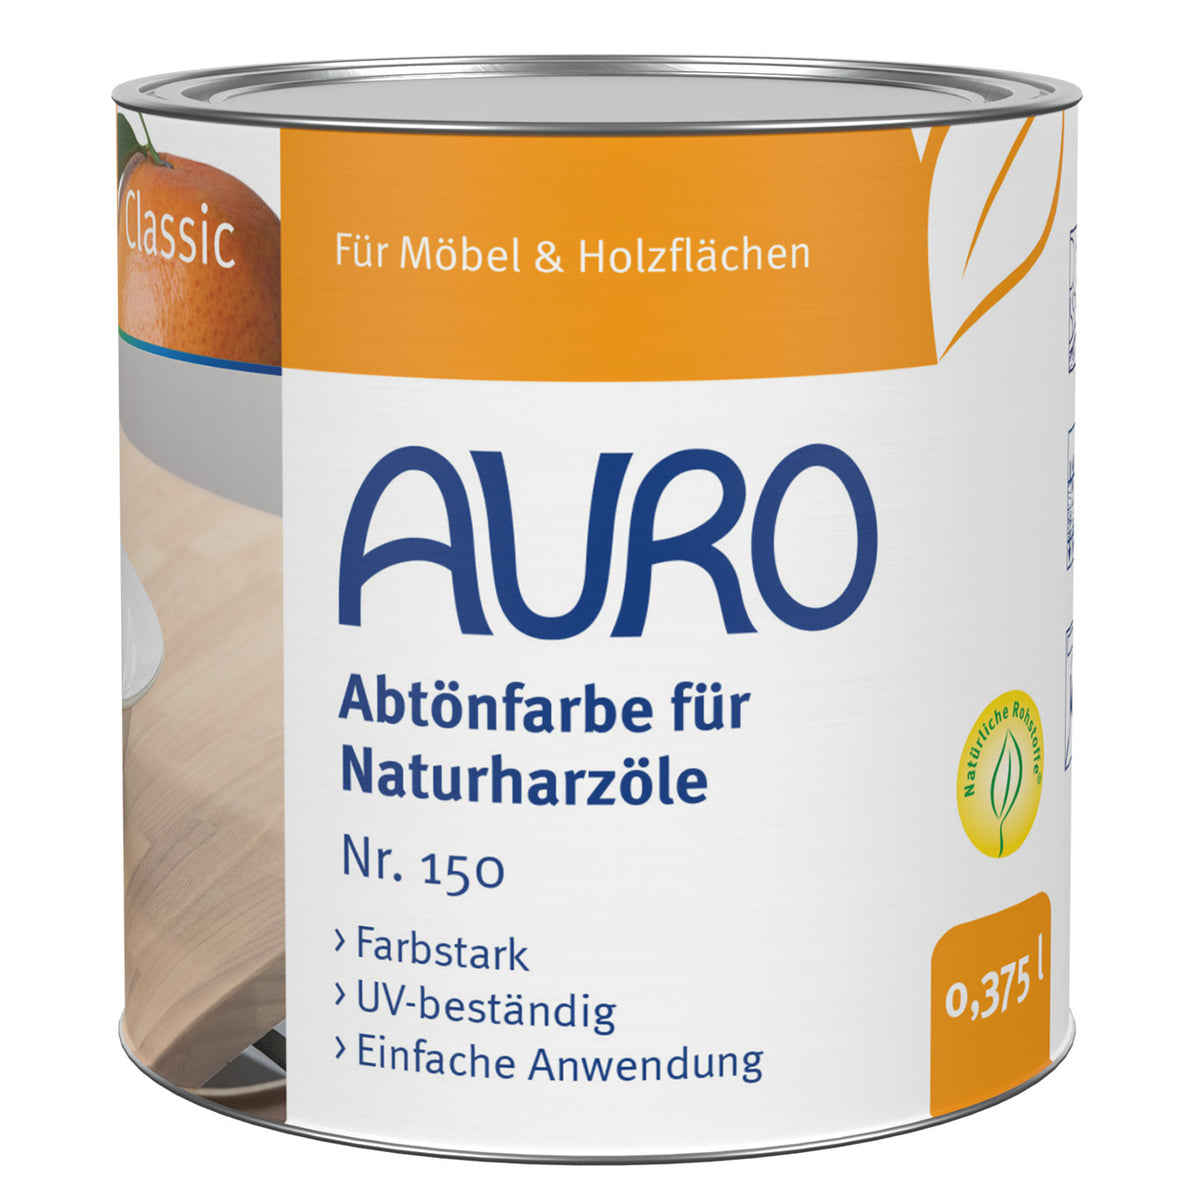 AURO Abtönfarbe für Naturharzöle Nr. 150-82 | Umbra gebrannt